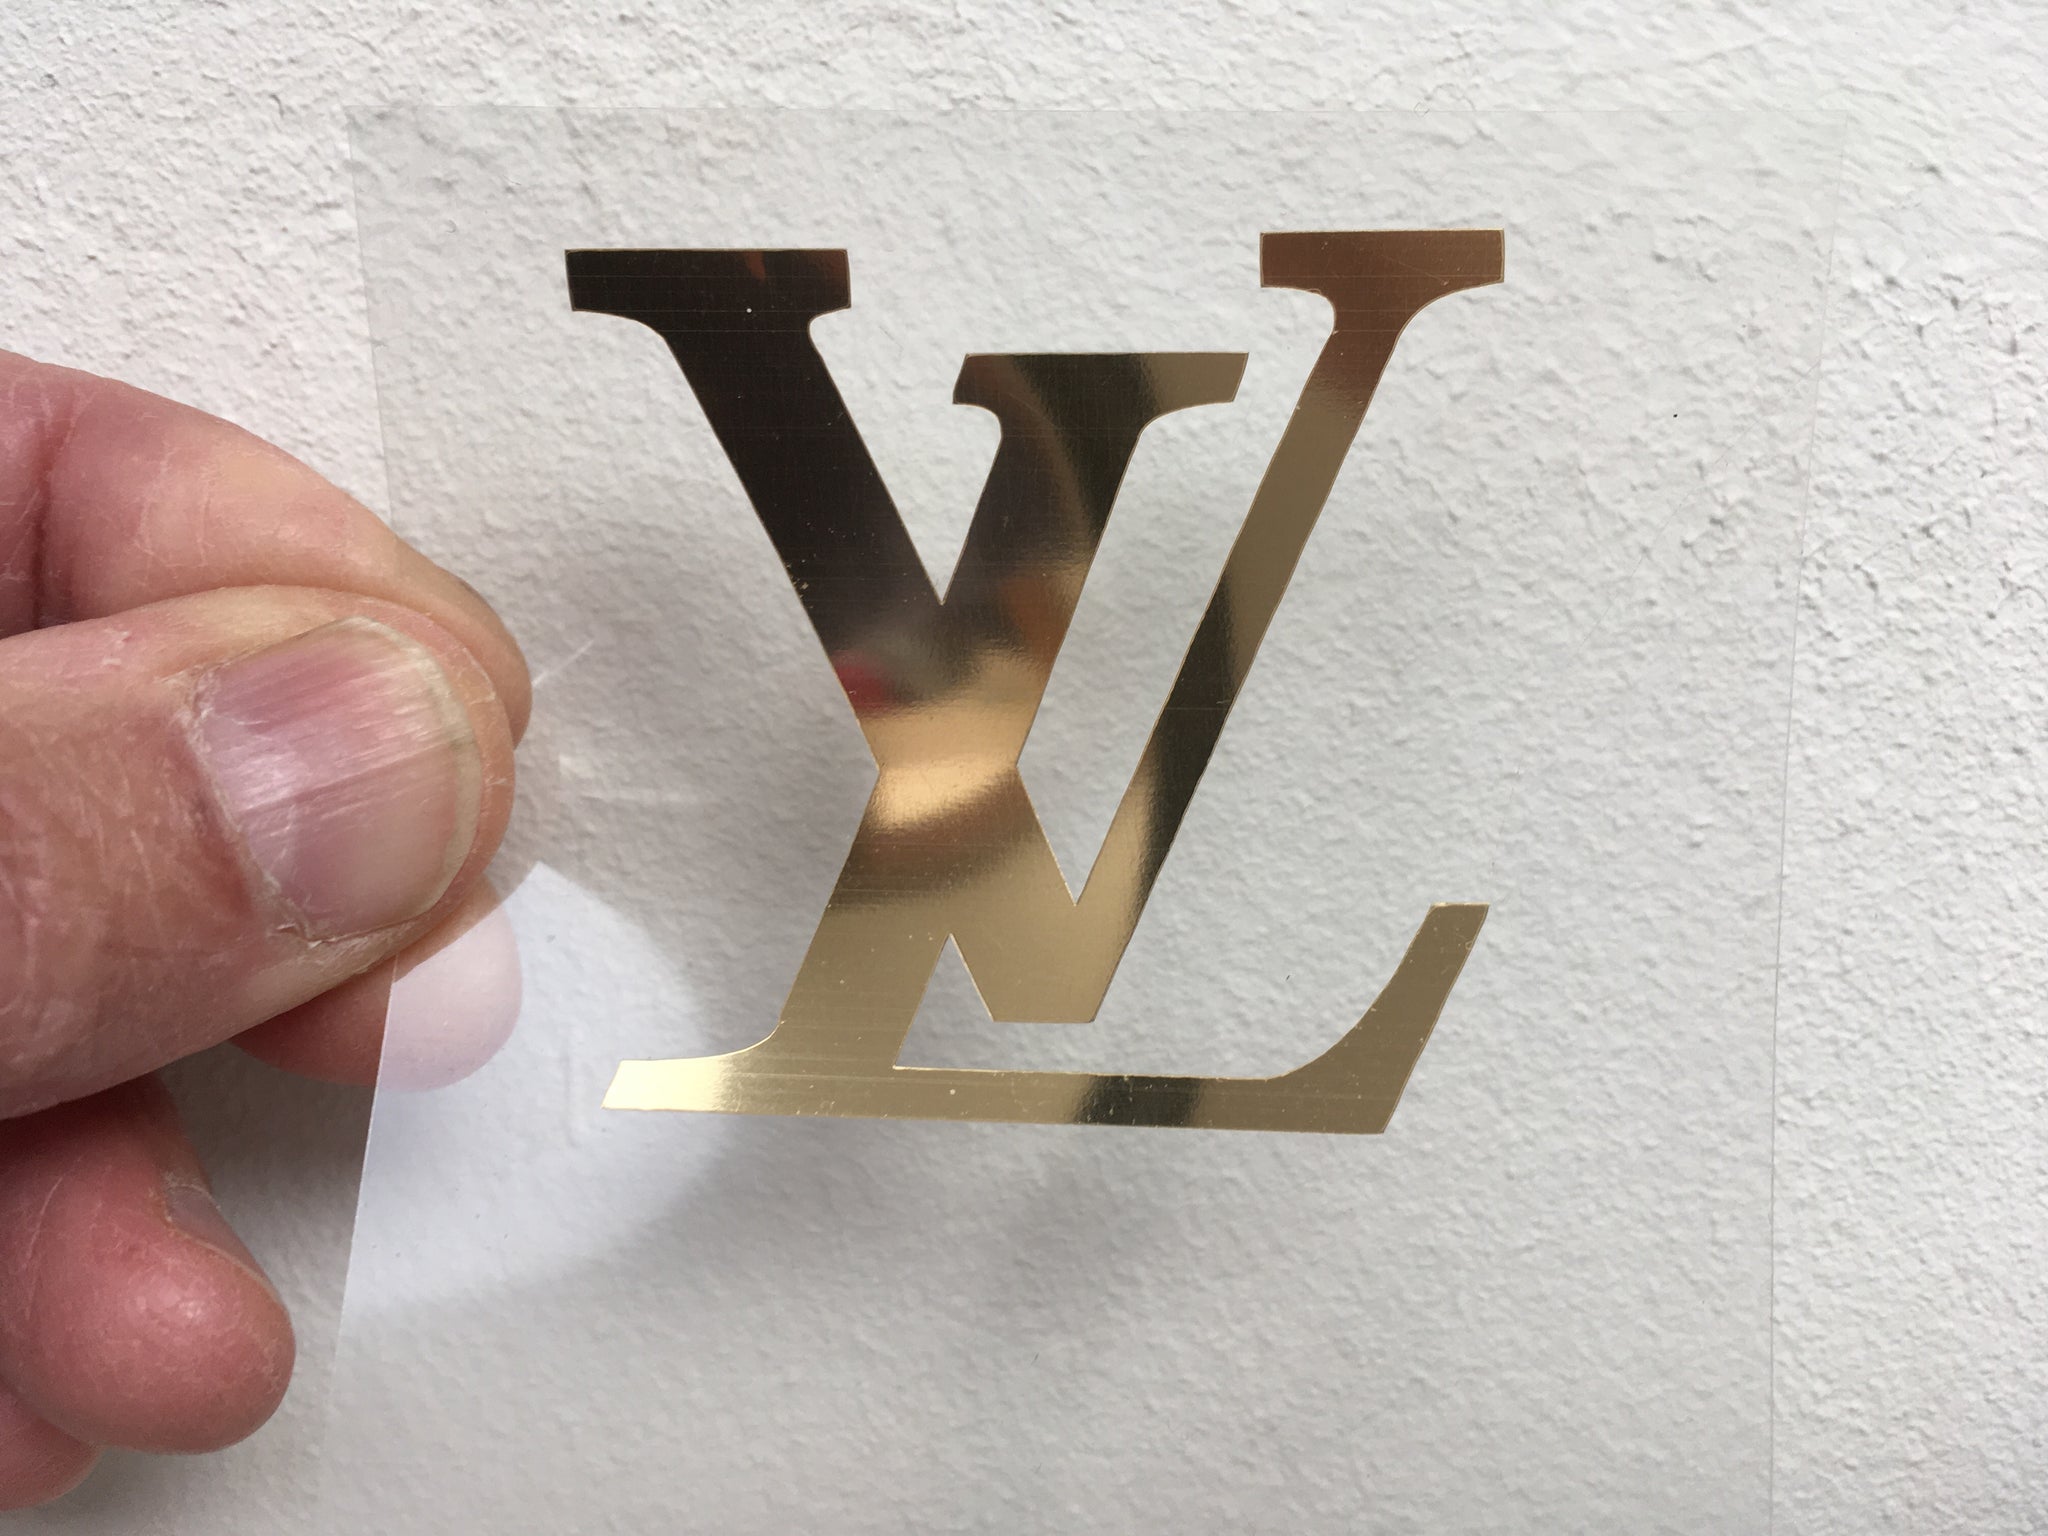 Louis Vuitton Logo V Vinyl Decal Sticker